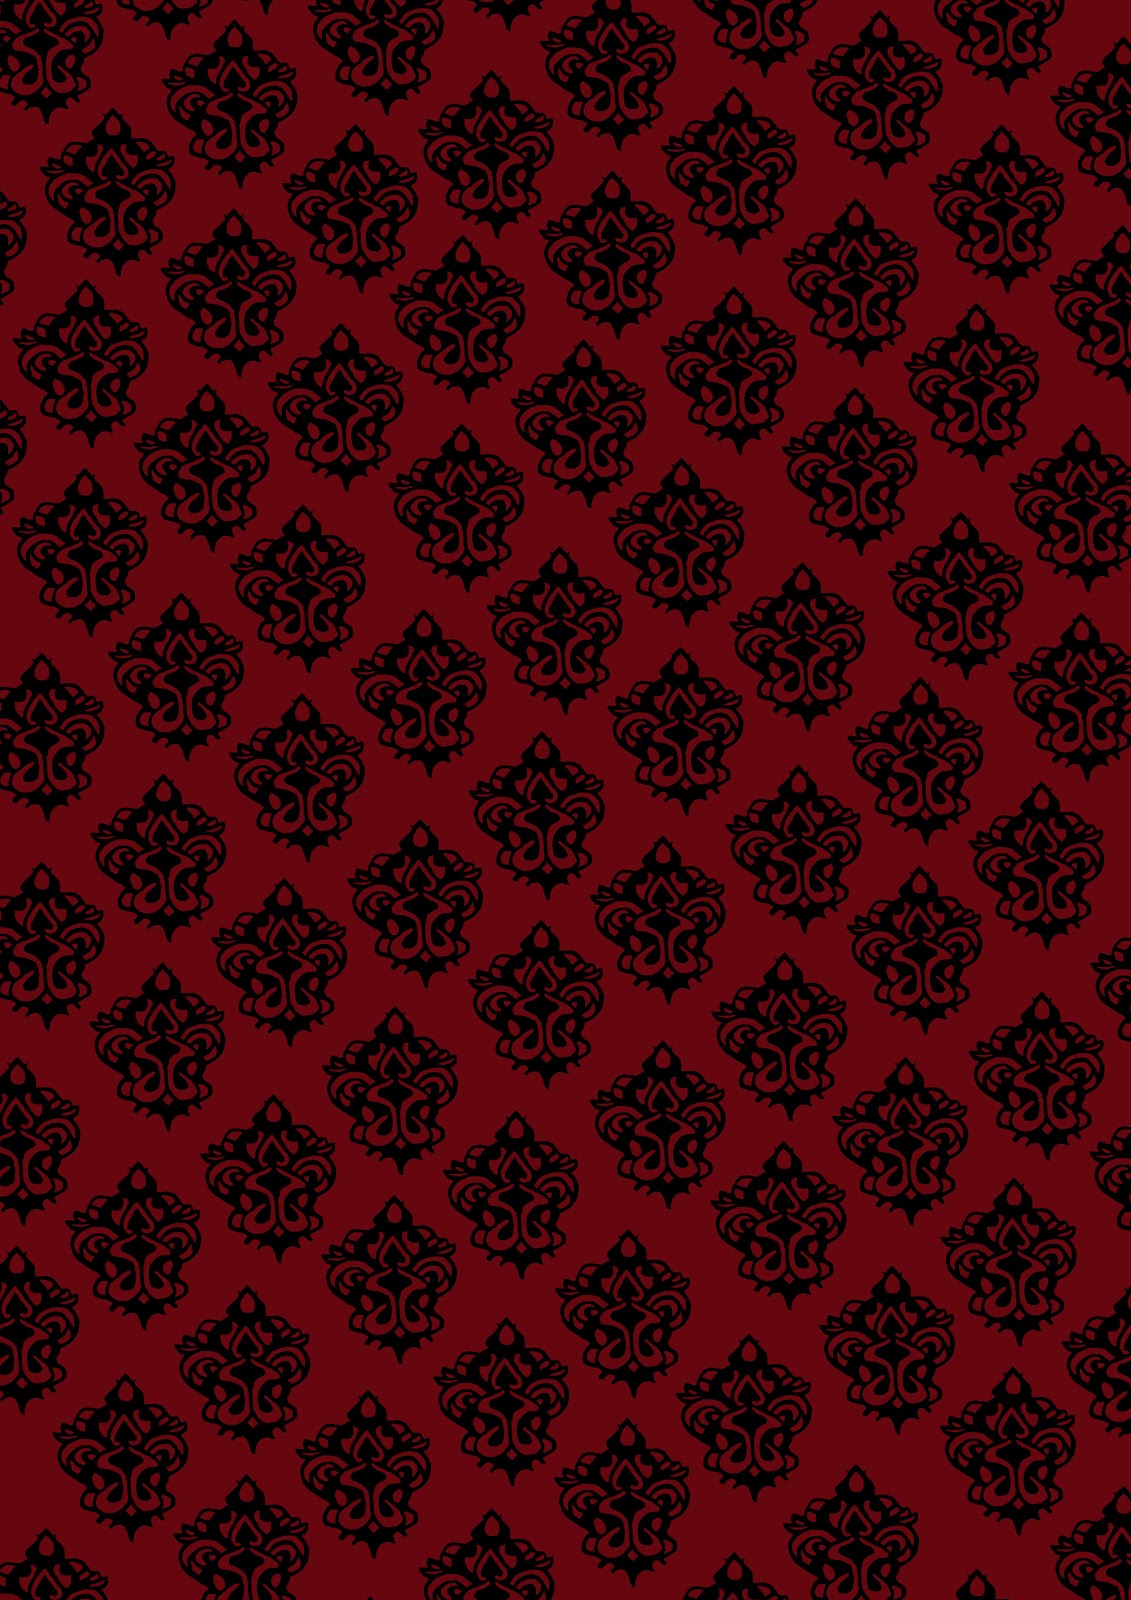 http://1.bp.blogspot.com/-TMjNO1UThbU/UKVboKt13DI/AAAAAAAACFA/0JNgzn2_Gdk/s1600/Red+Gothic+motif.jpg